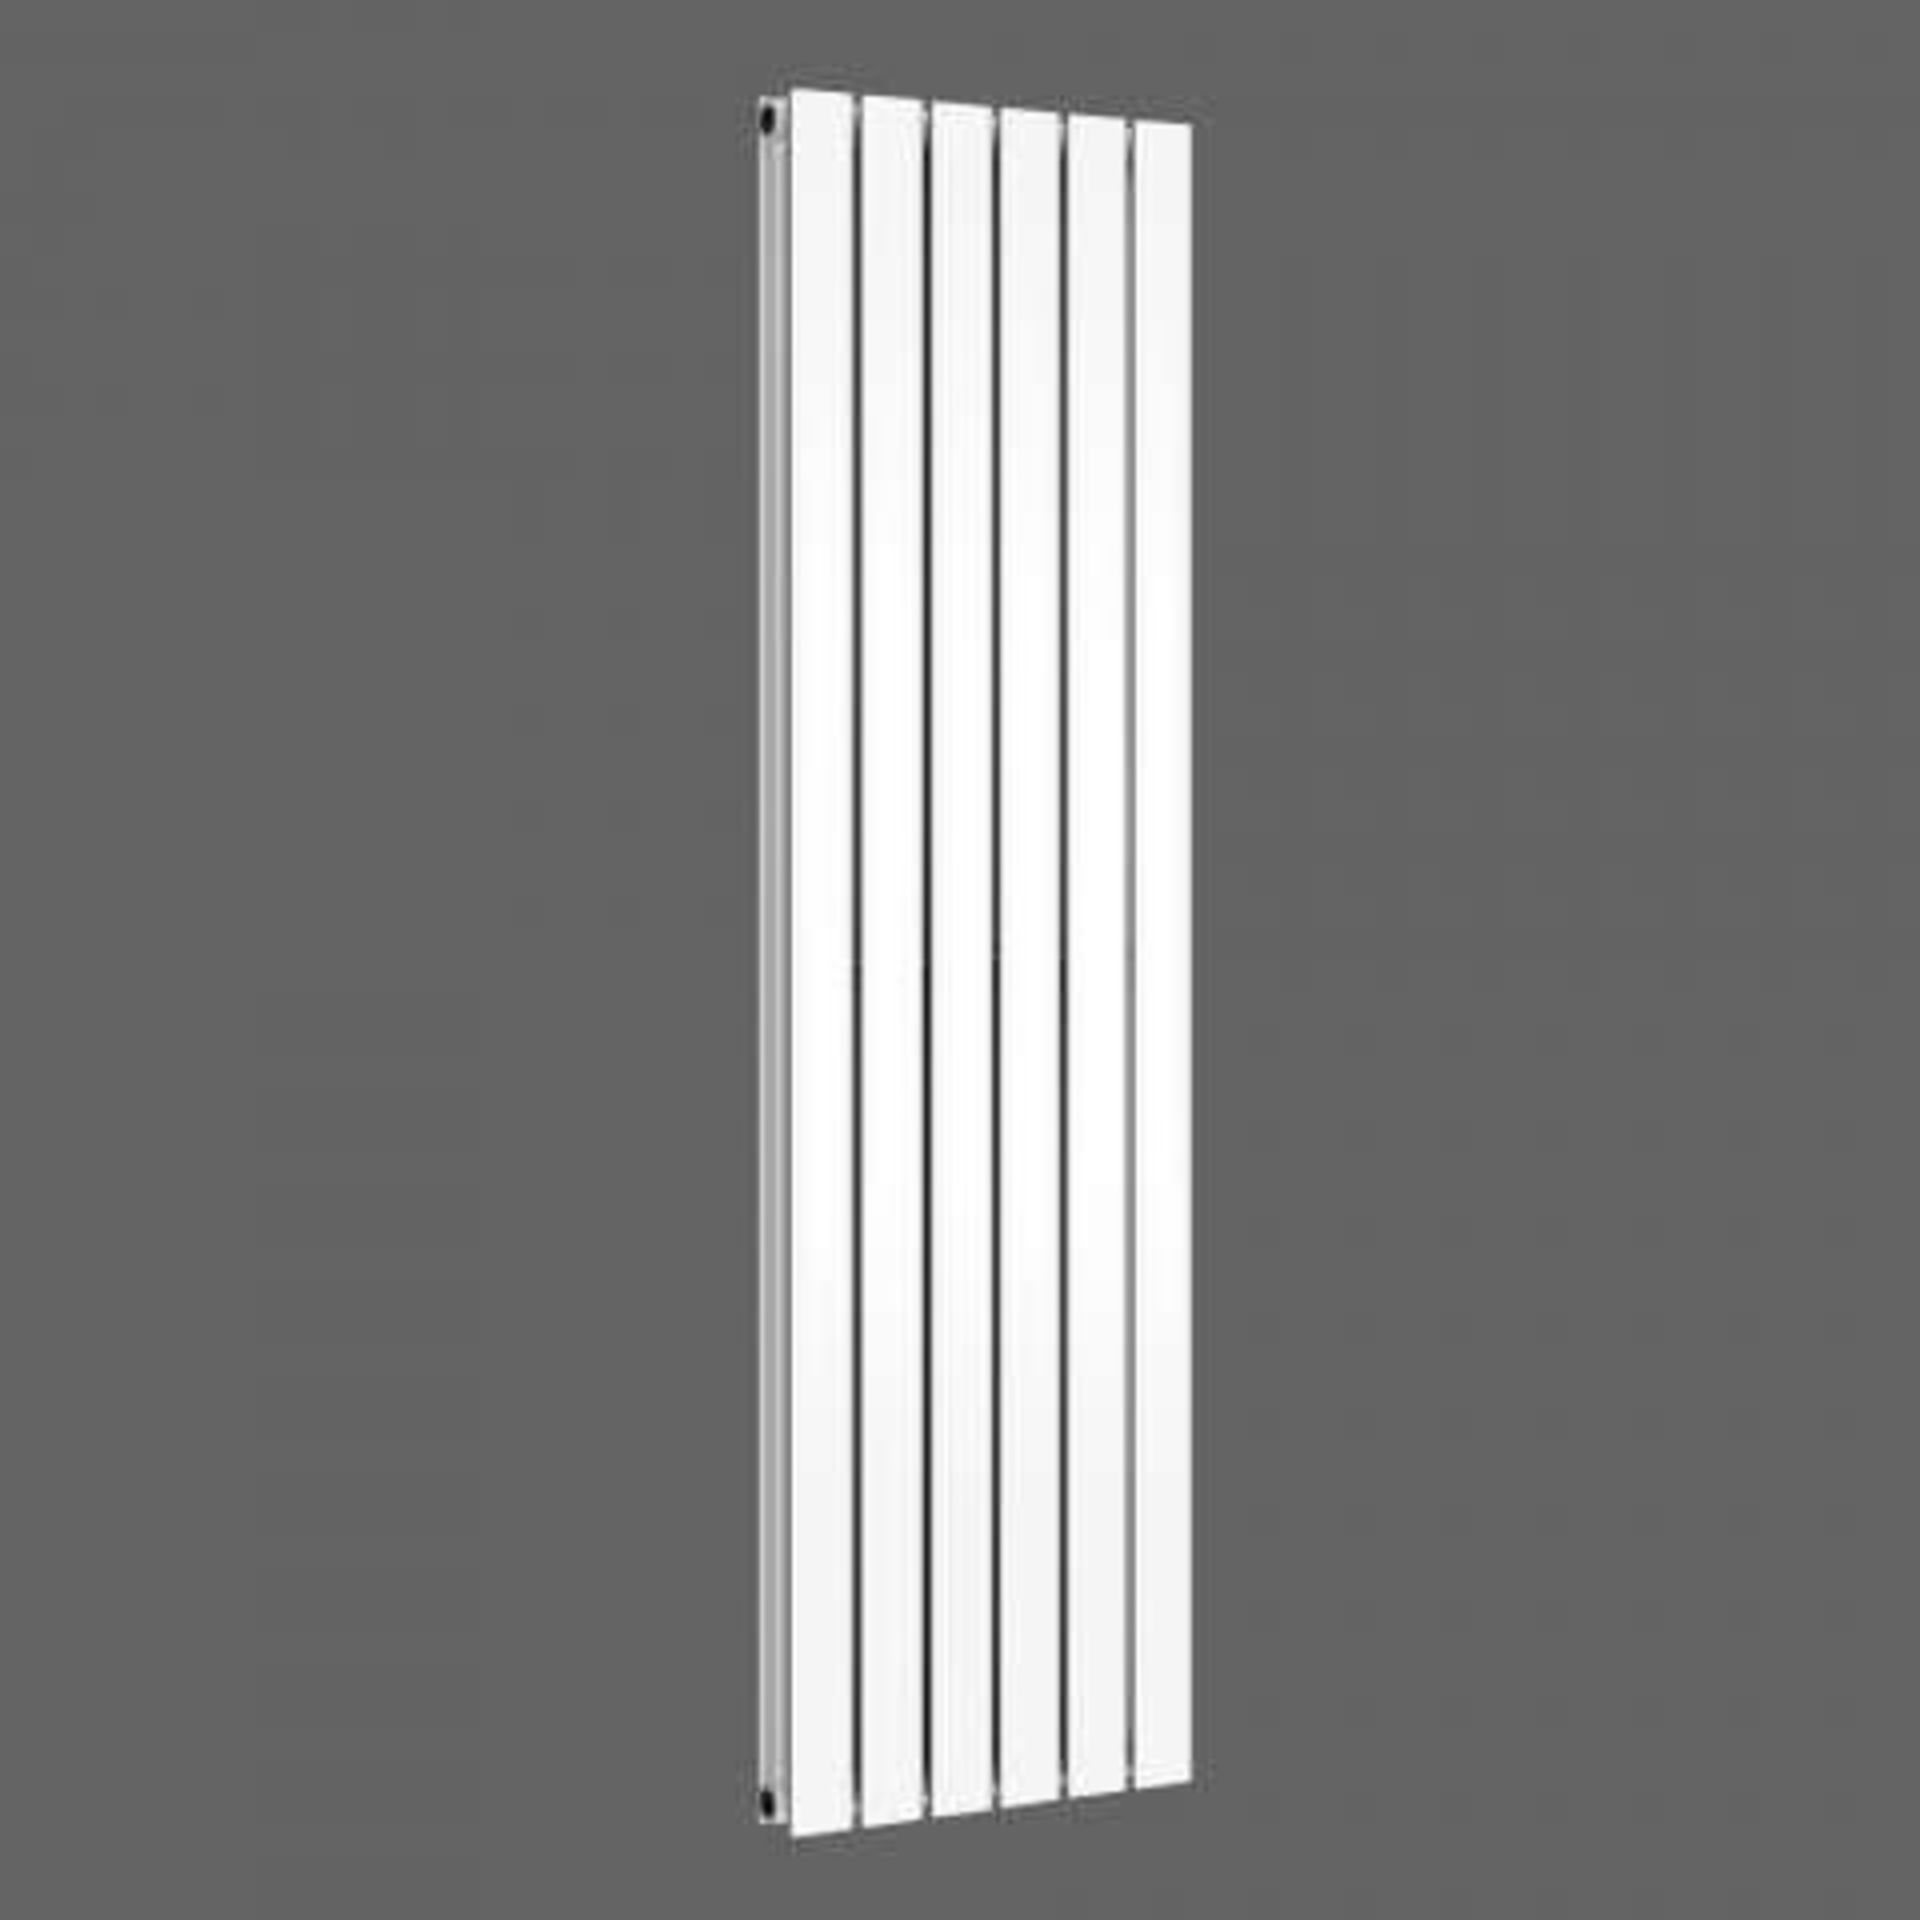 (C12) 1600x452mm Gloss White Double Flat Panel Vertical Radiator - Thera Range. RRP £474.99. - Image 3 of 3